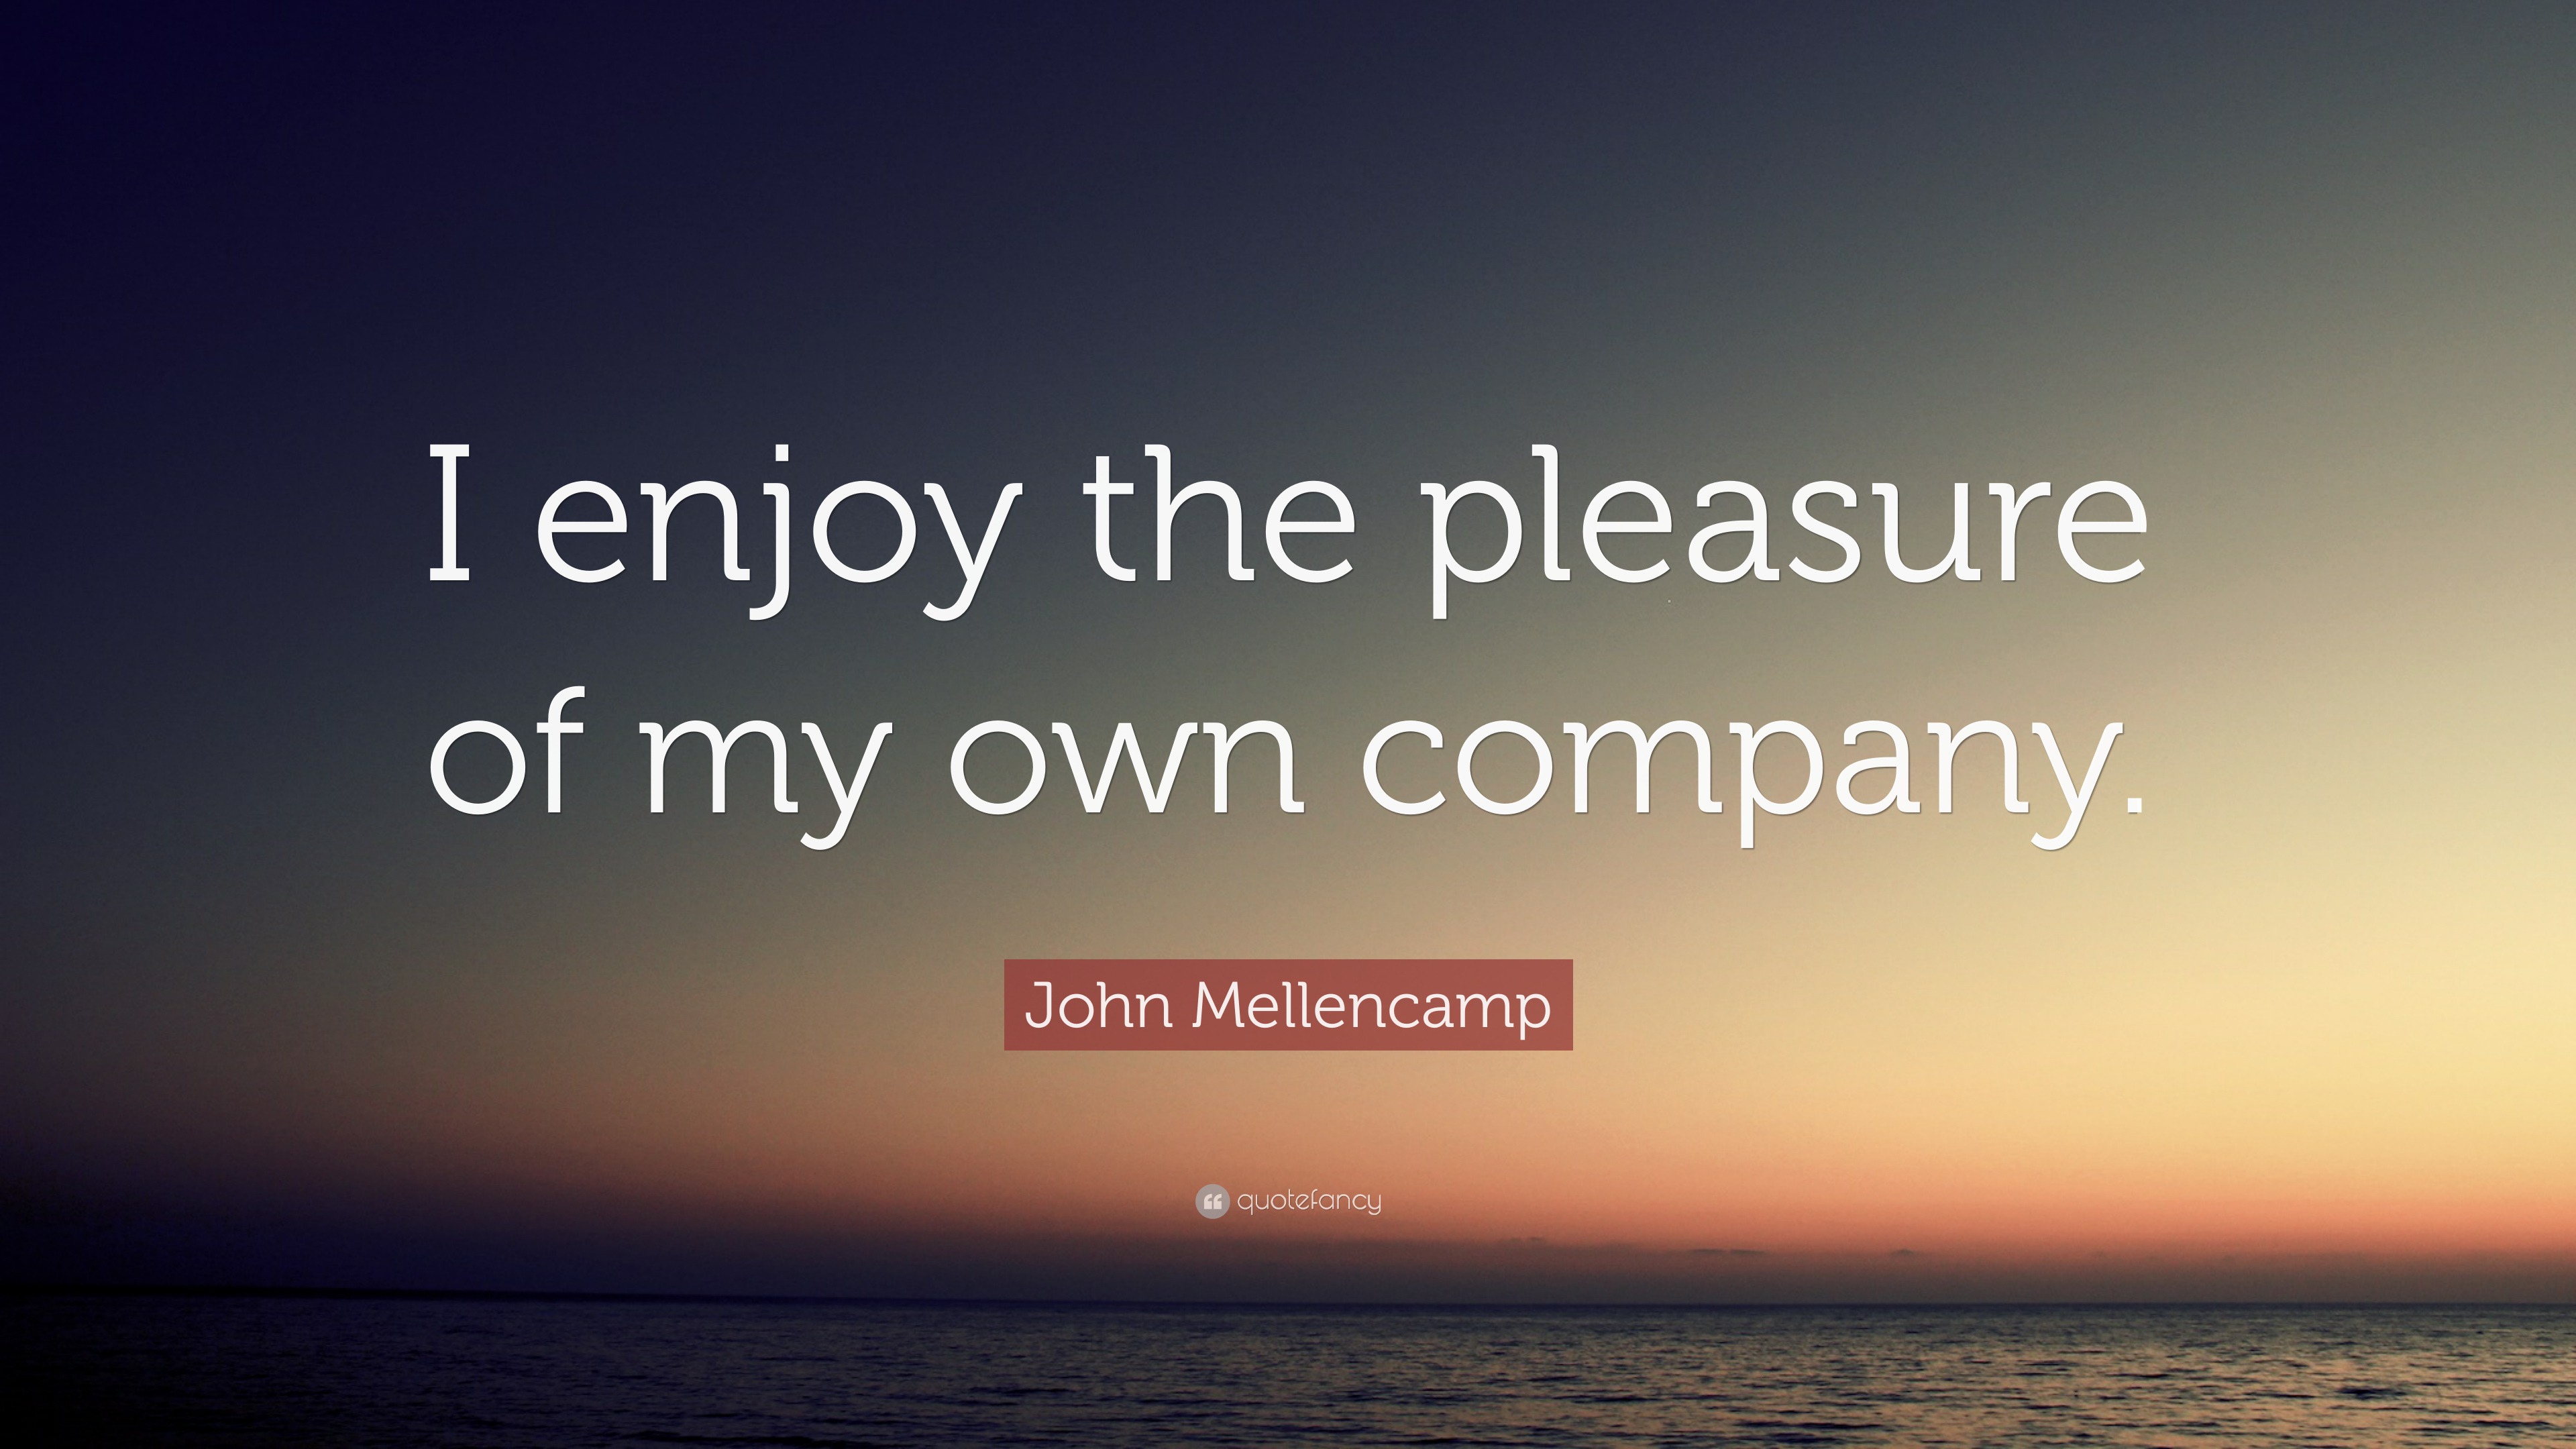 John Mellencamp Quote: “I Enjoy The Pleasure Of My Own Company.”